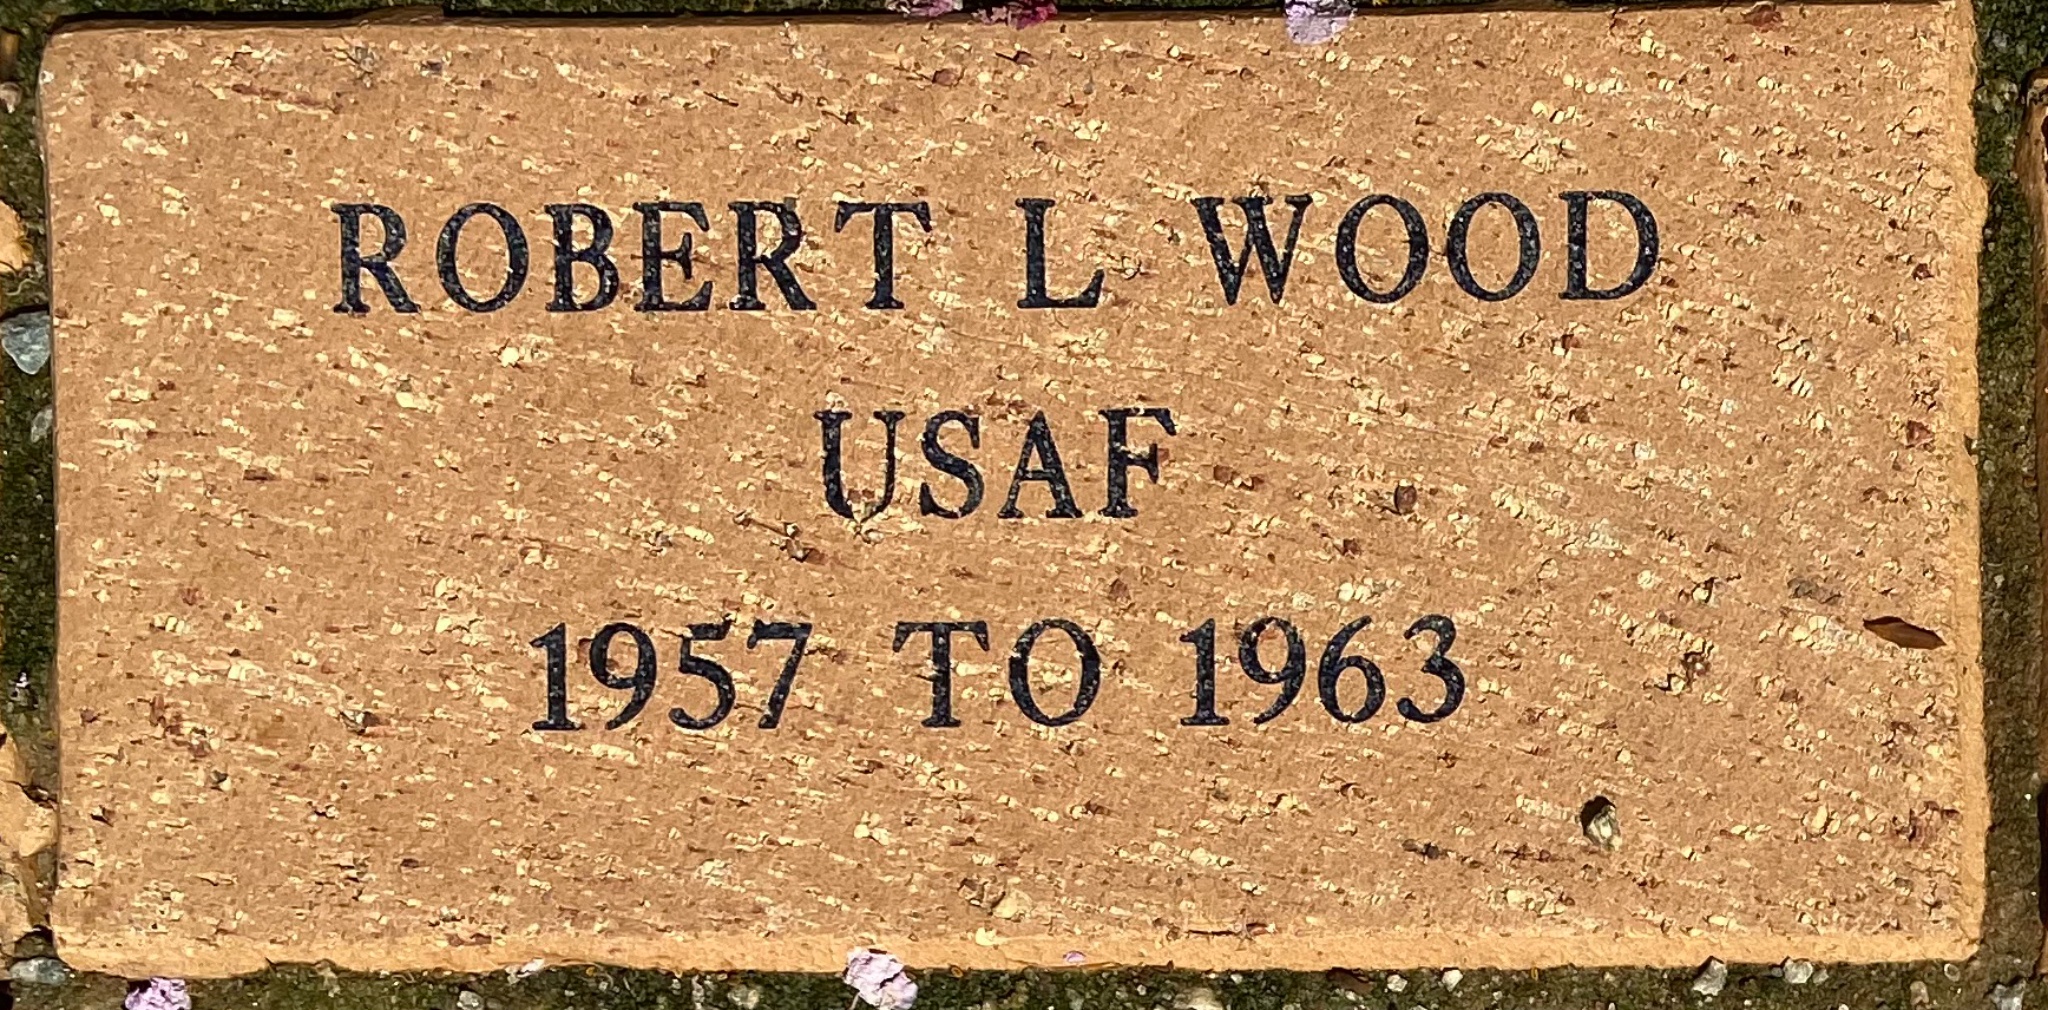 ROBERT L WOOD USAF 1957 TO 1963